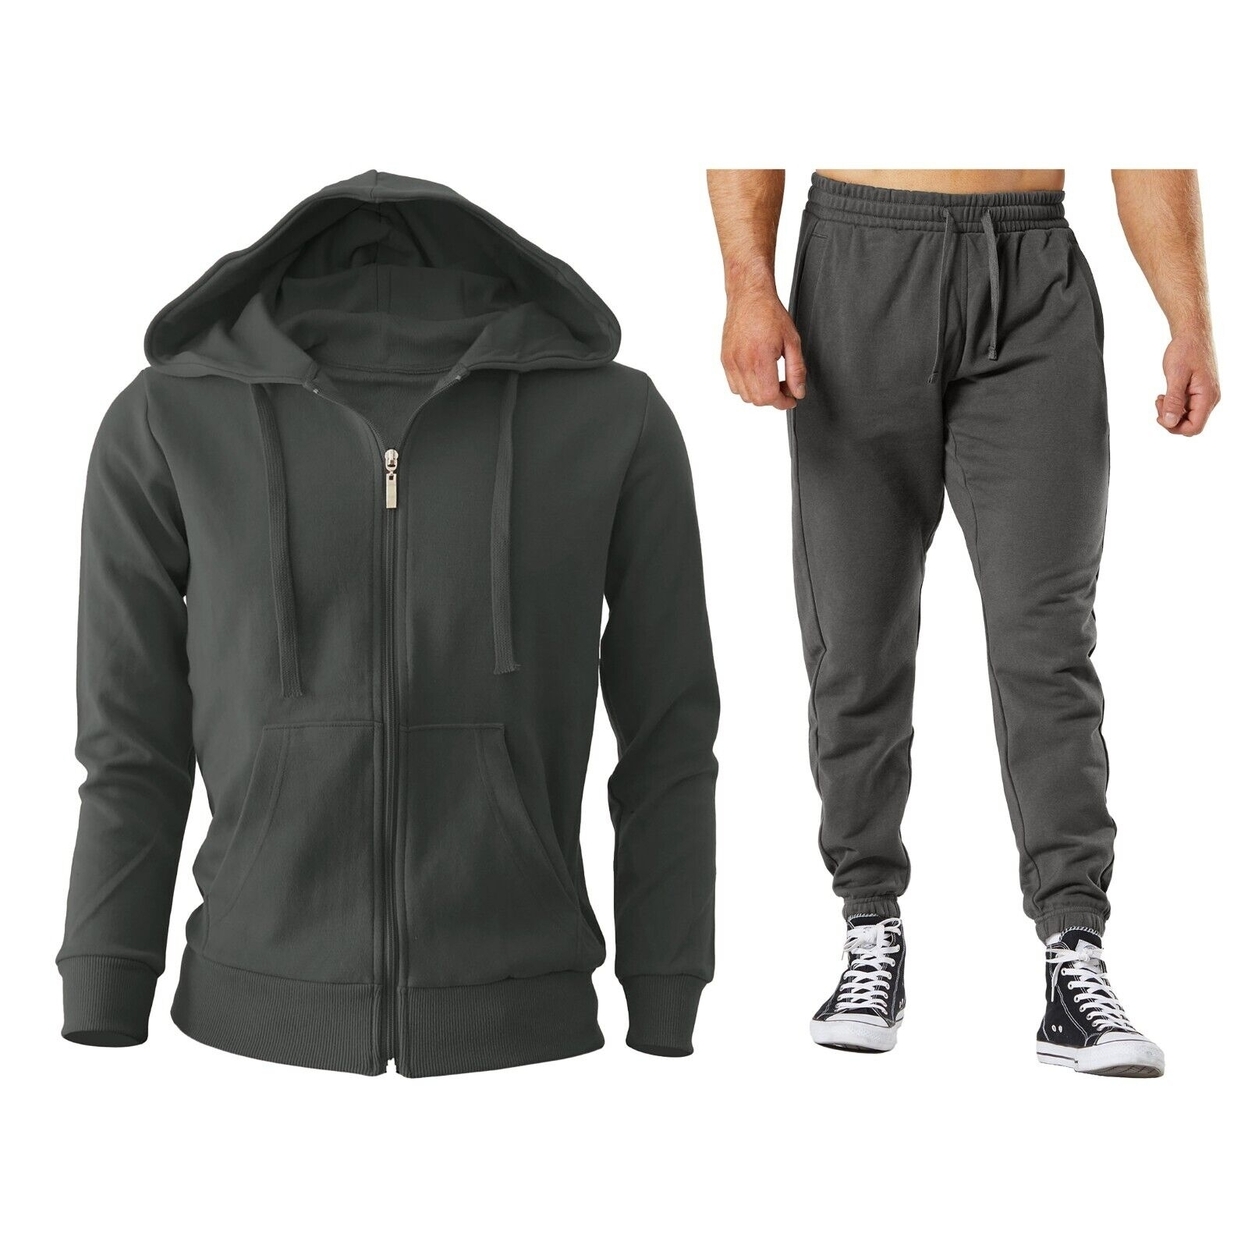 2/4-Piece: Men's Winter Warm Cozy Athletic Multi-Pockets BIG & TALL Sweatsuit Set - Charcoal, 1, 3xl